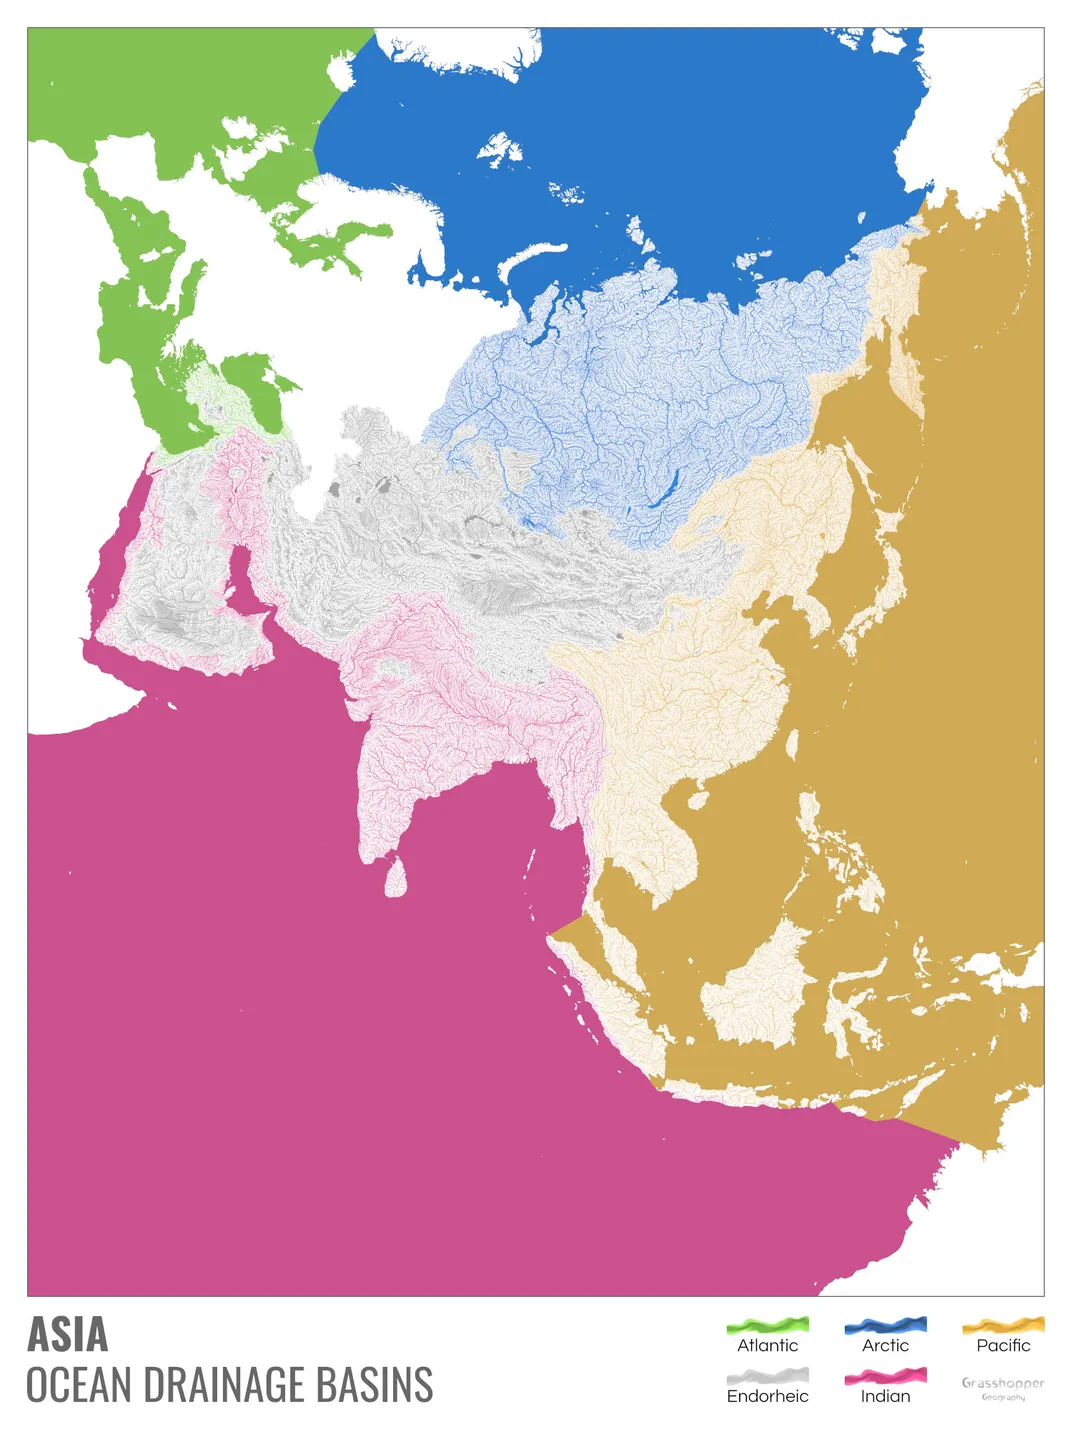 Ocean Drainage Basin Map of Asia